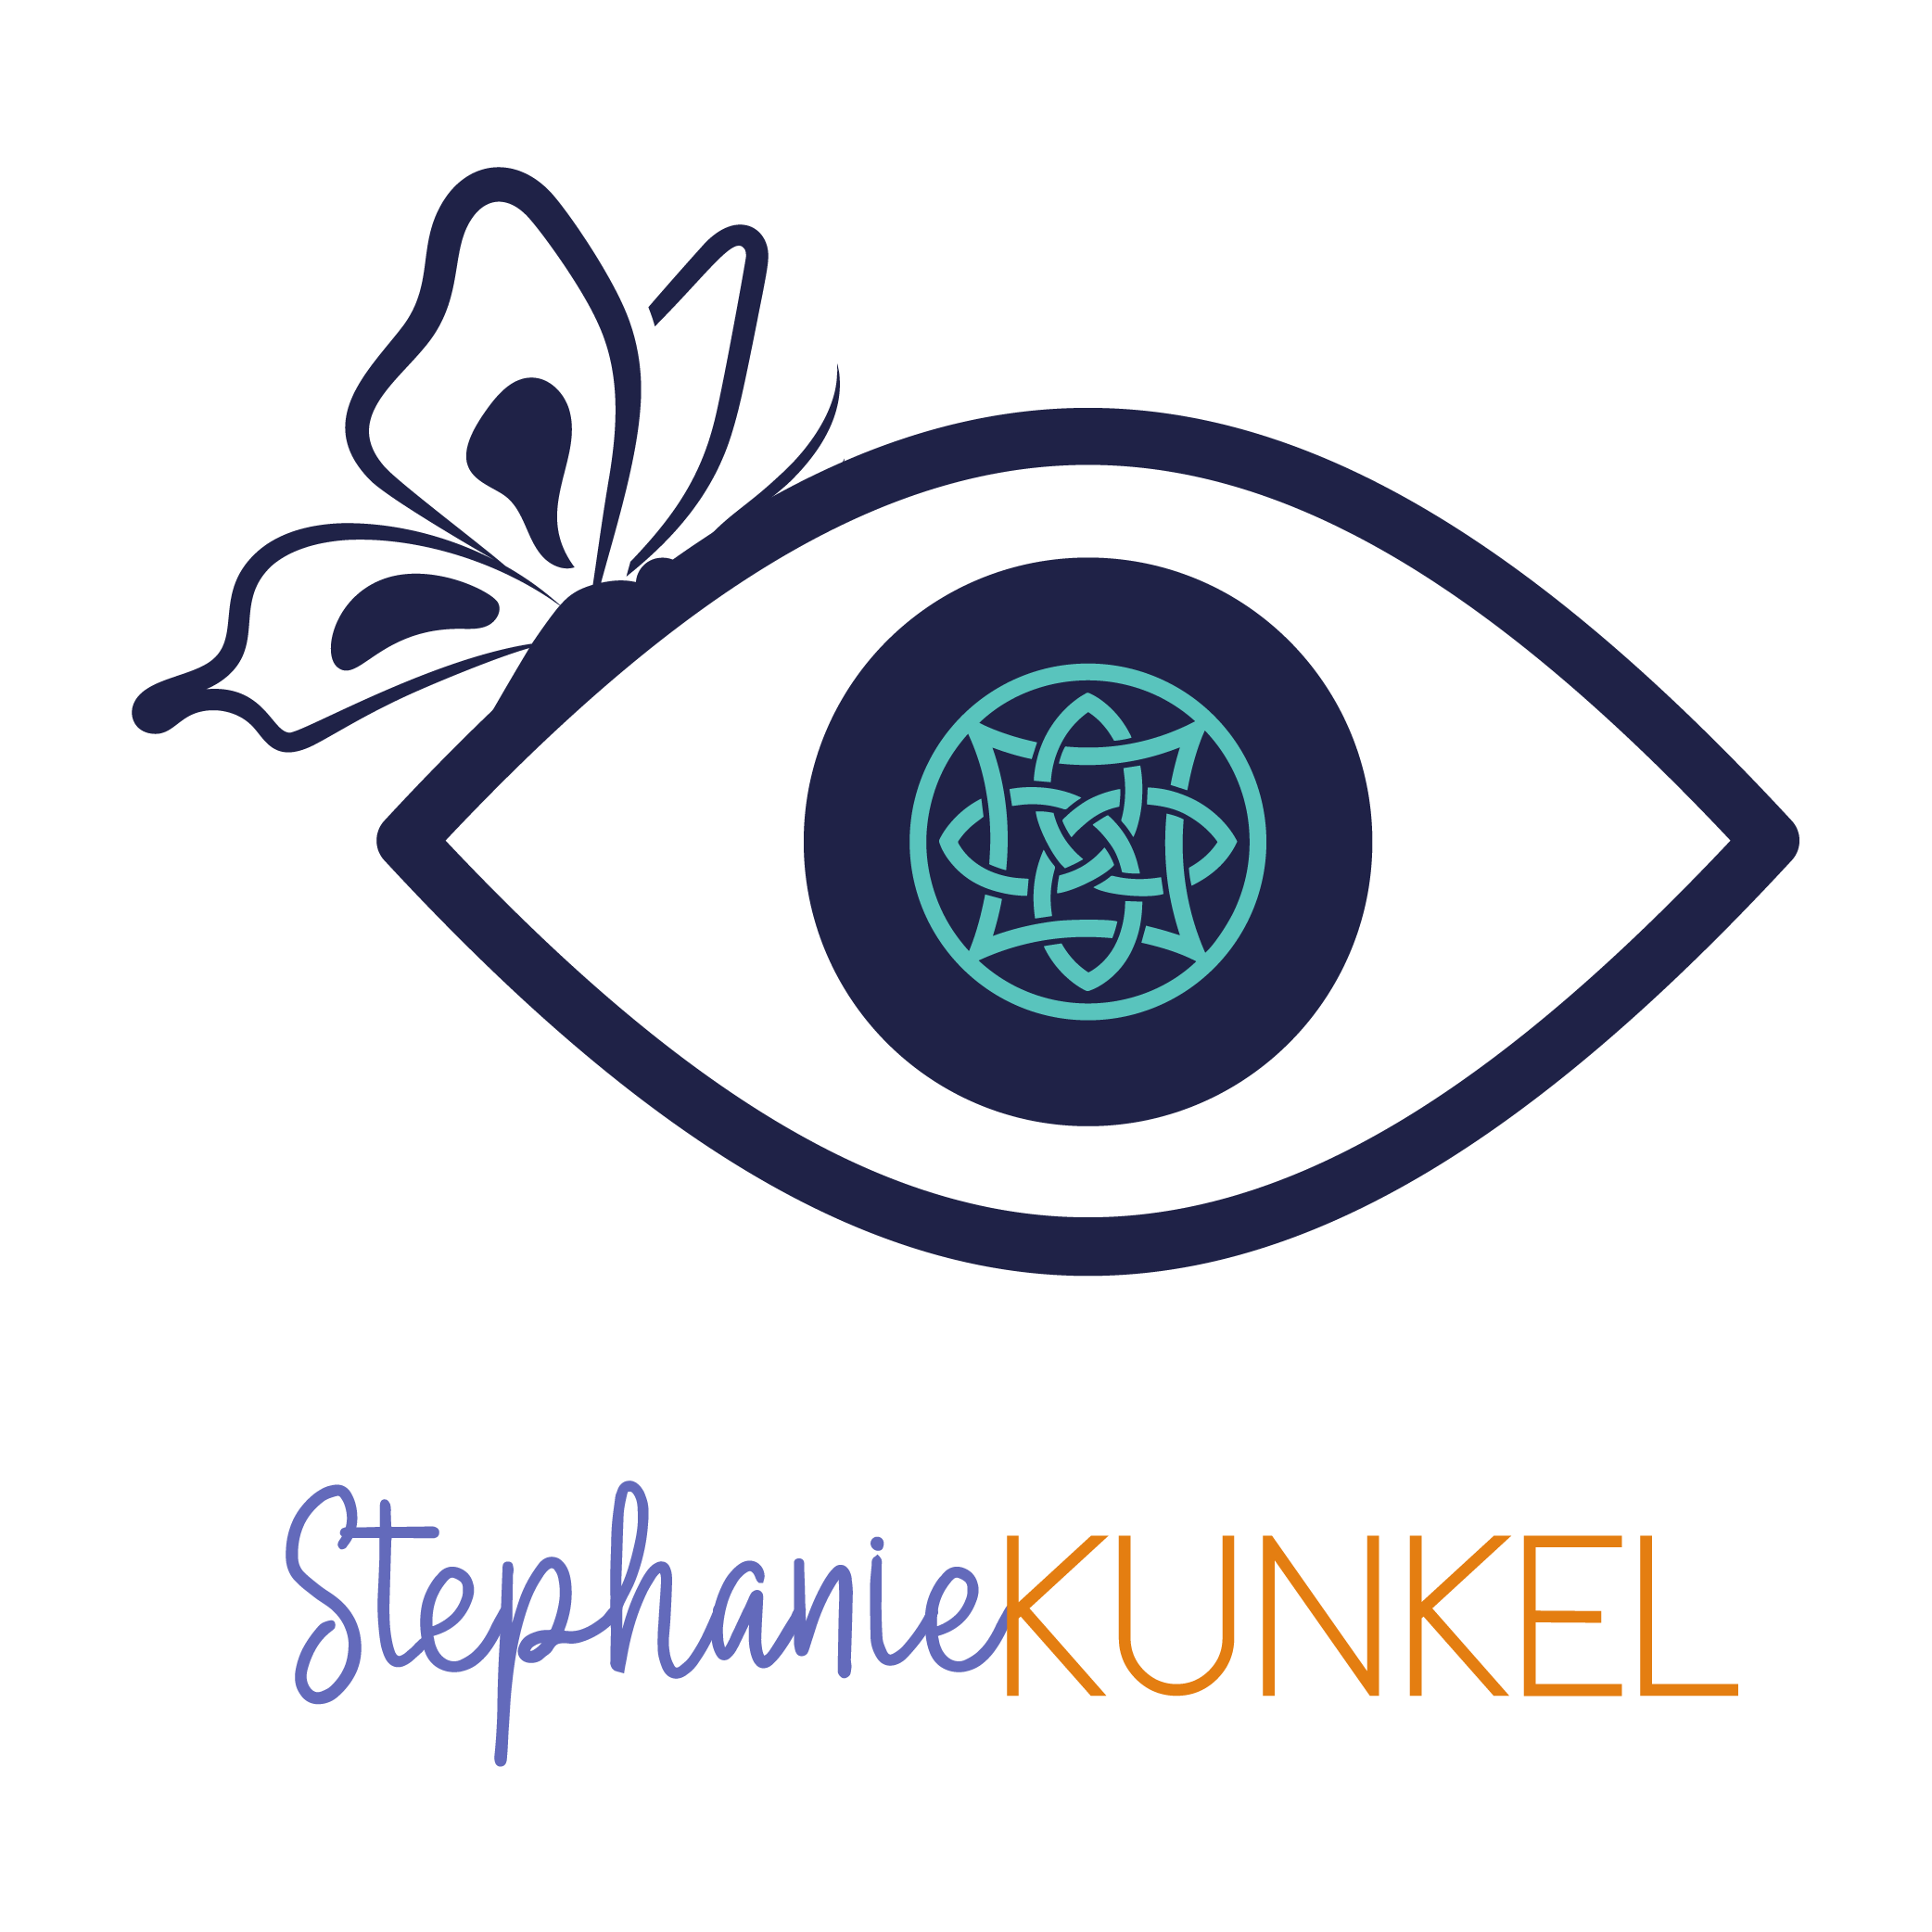 Stephanie Kunkel, Perspective Shifting, LLC